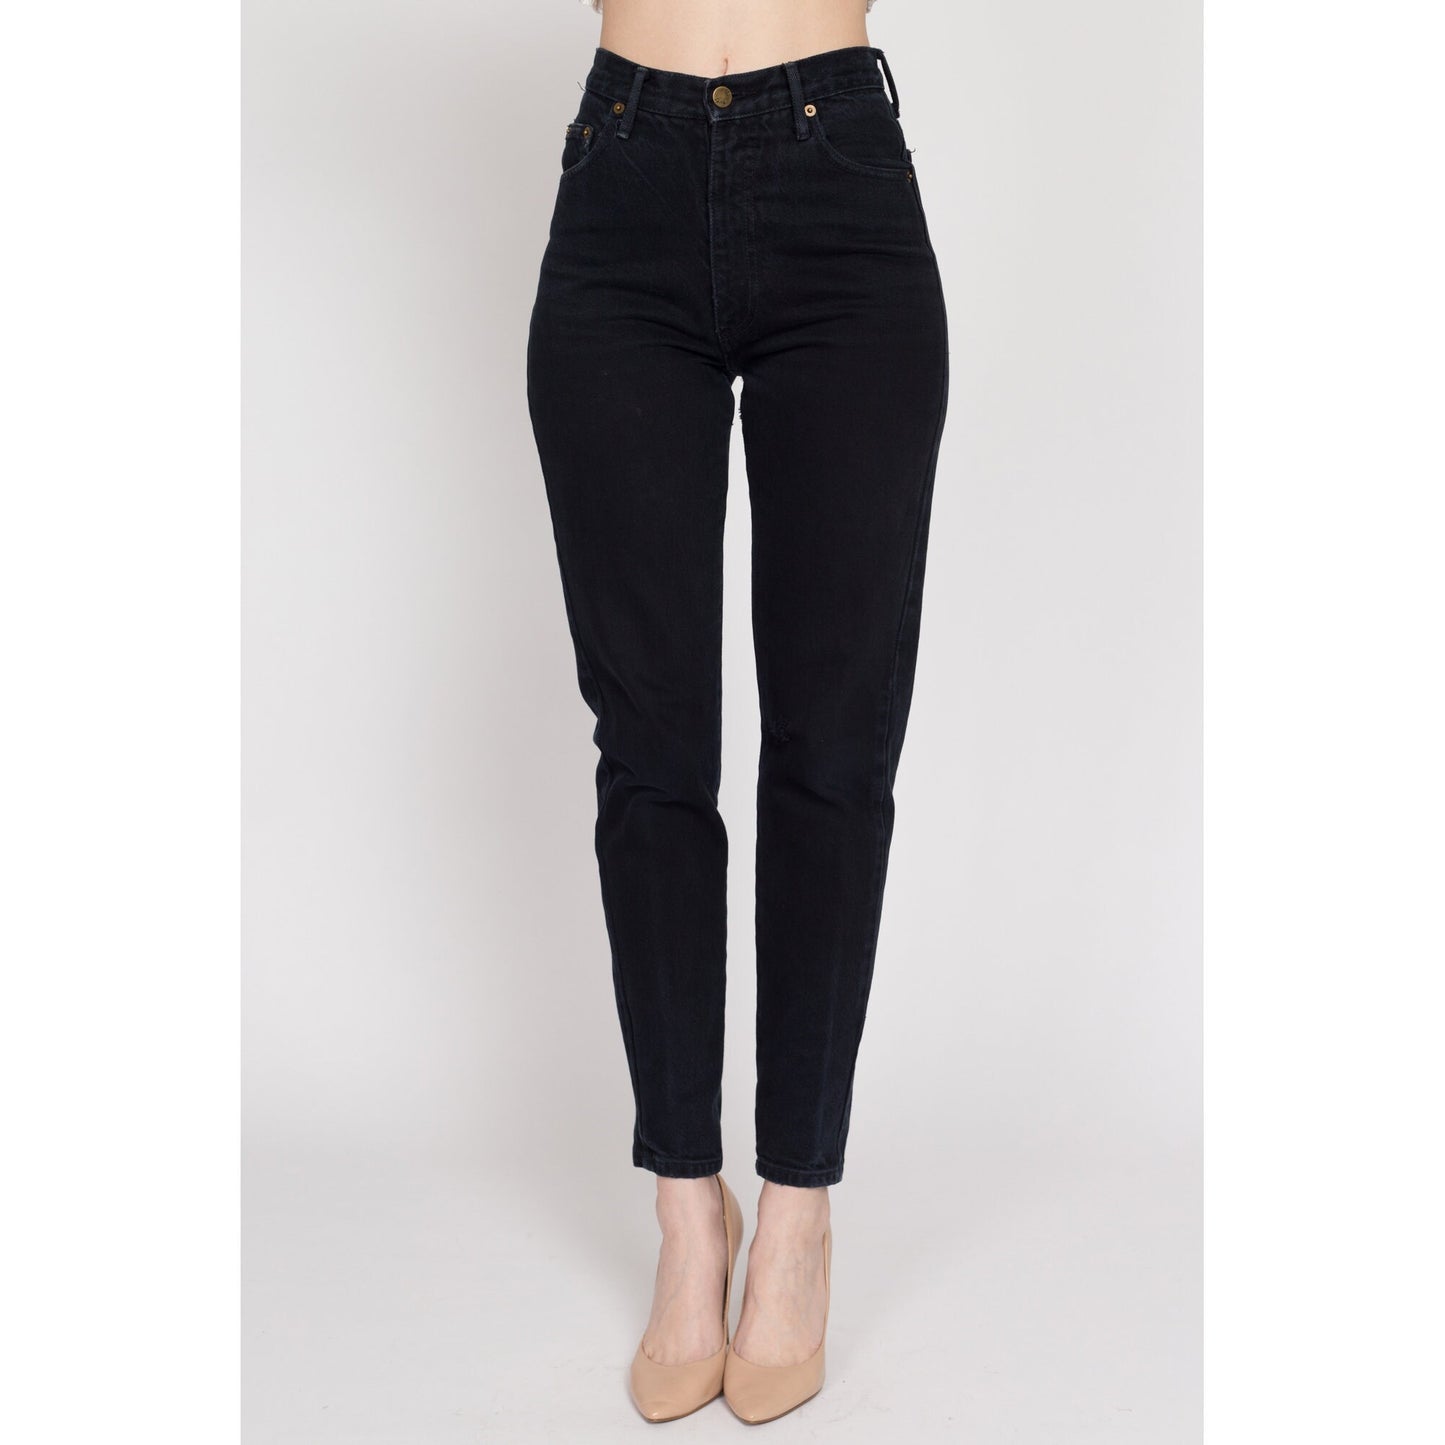 XS 90s Black High Waisted Jeans 25" | Vintage Paris Blues Denim Tapered Leg Slim Skinny Mom Jeans